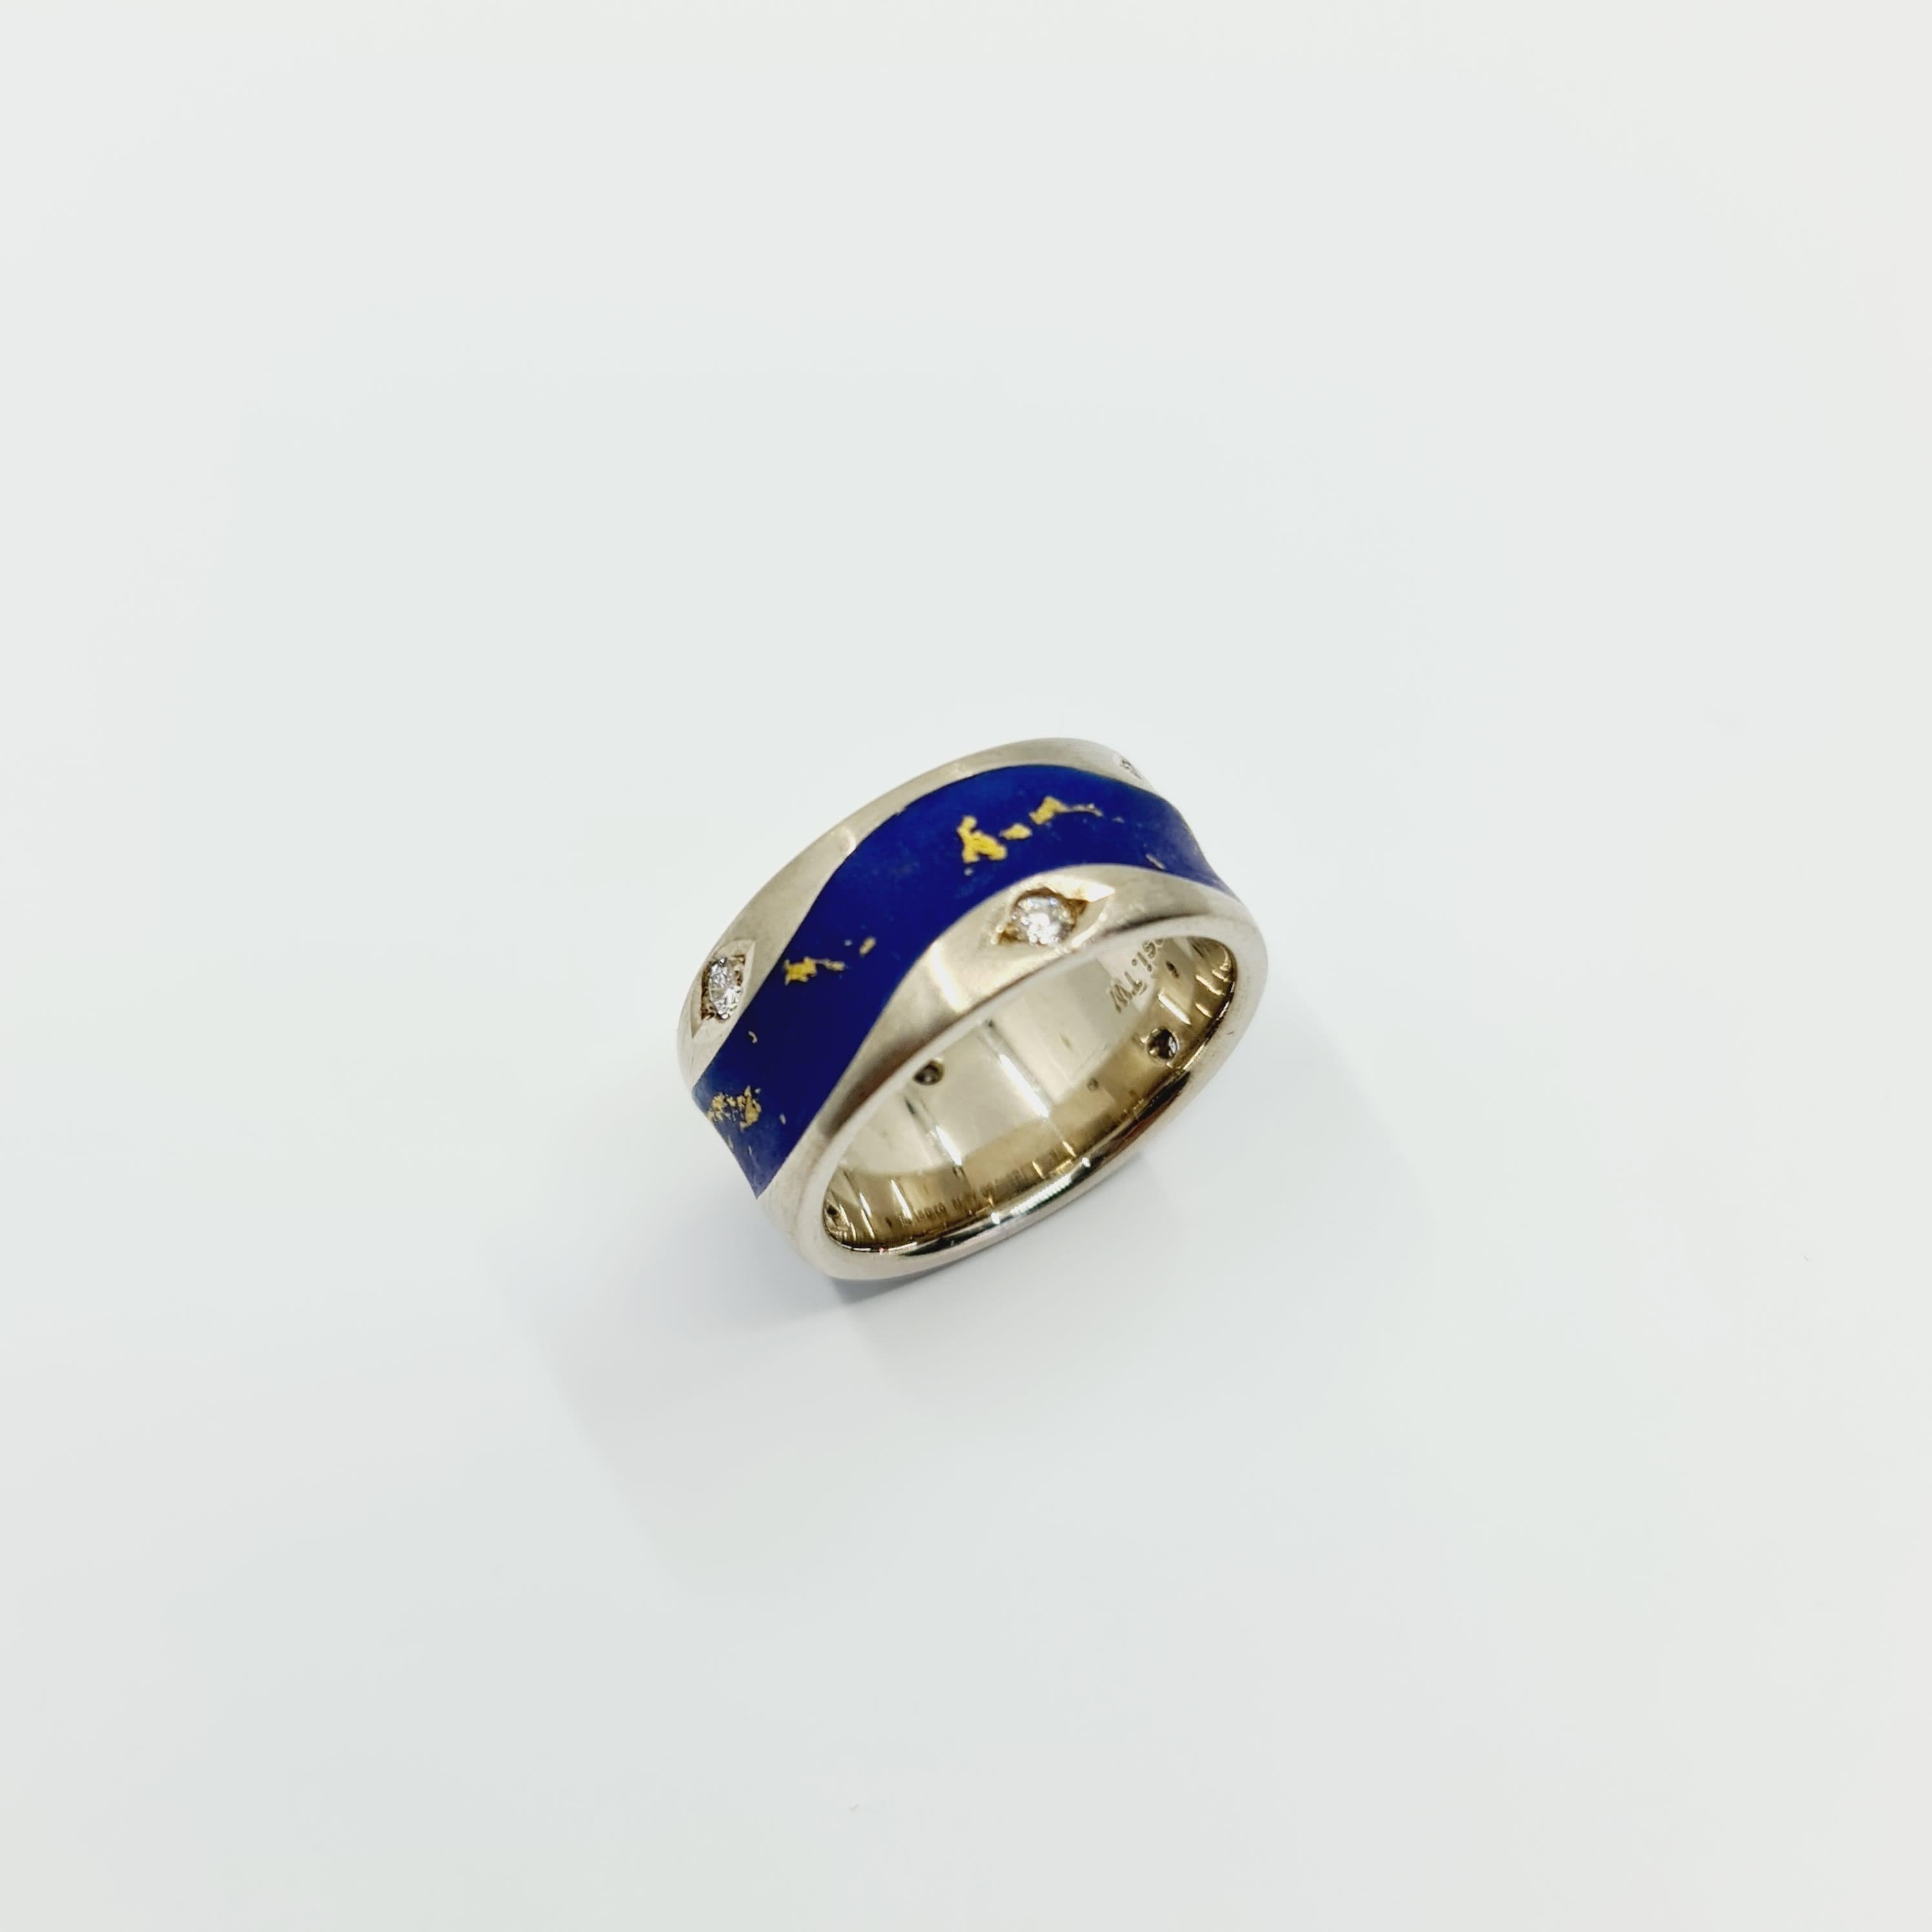 0.21 Carat Diamond Ring G/SI1 18k White Gold, Blue / Yellow Enamel, 6 Brillants For Sale 1